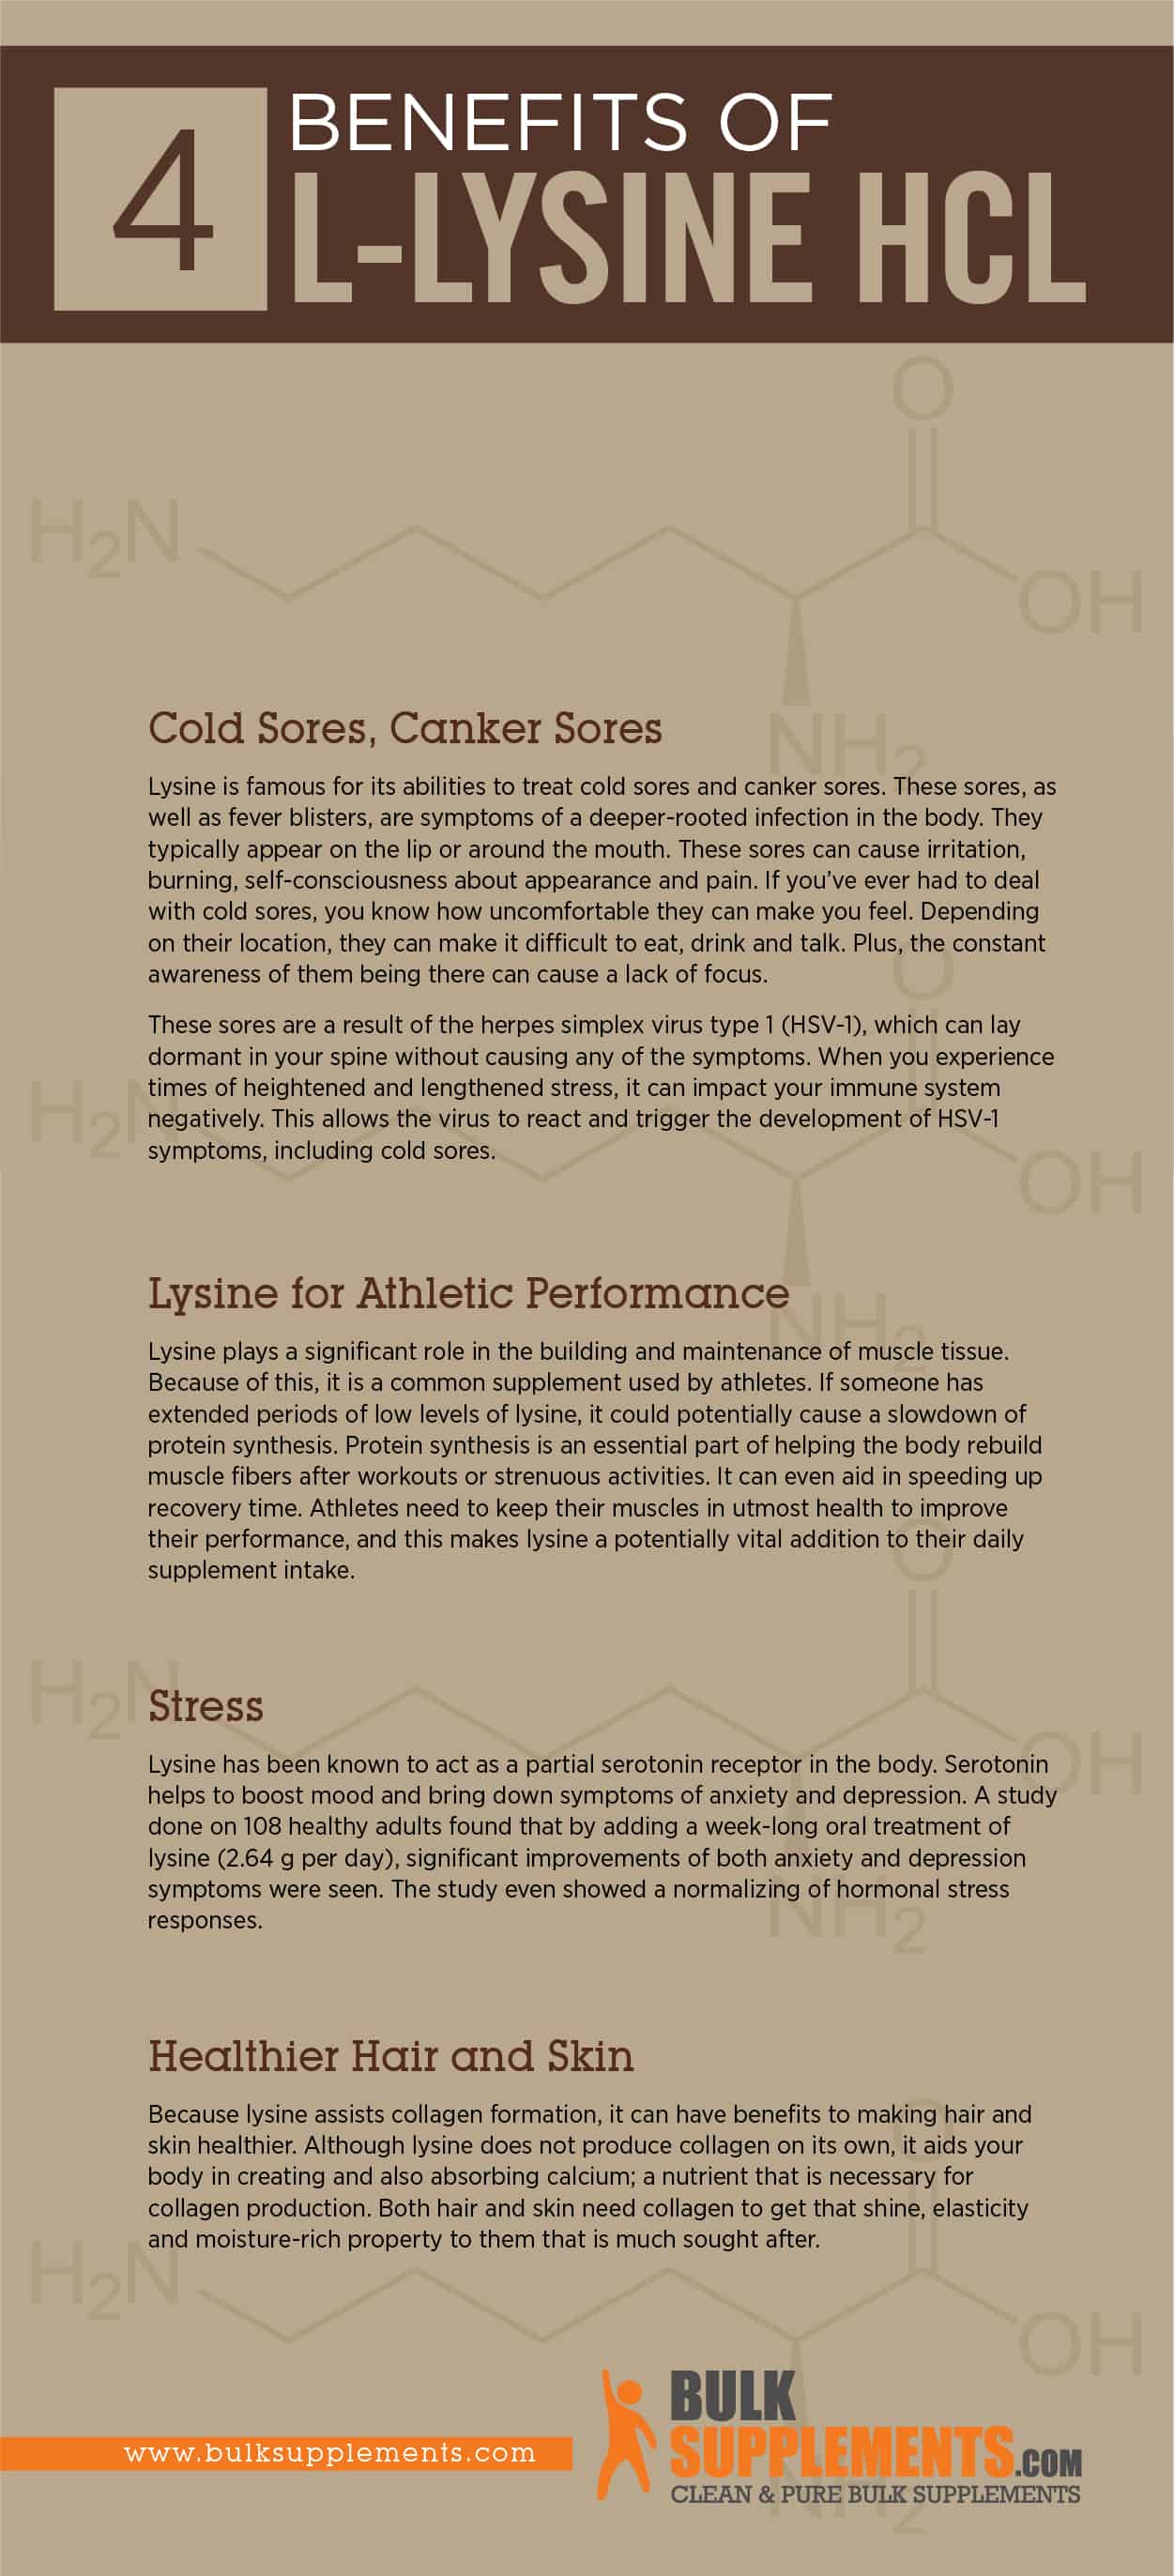 Benefits of L-Lysine HCL